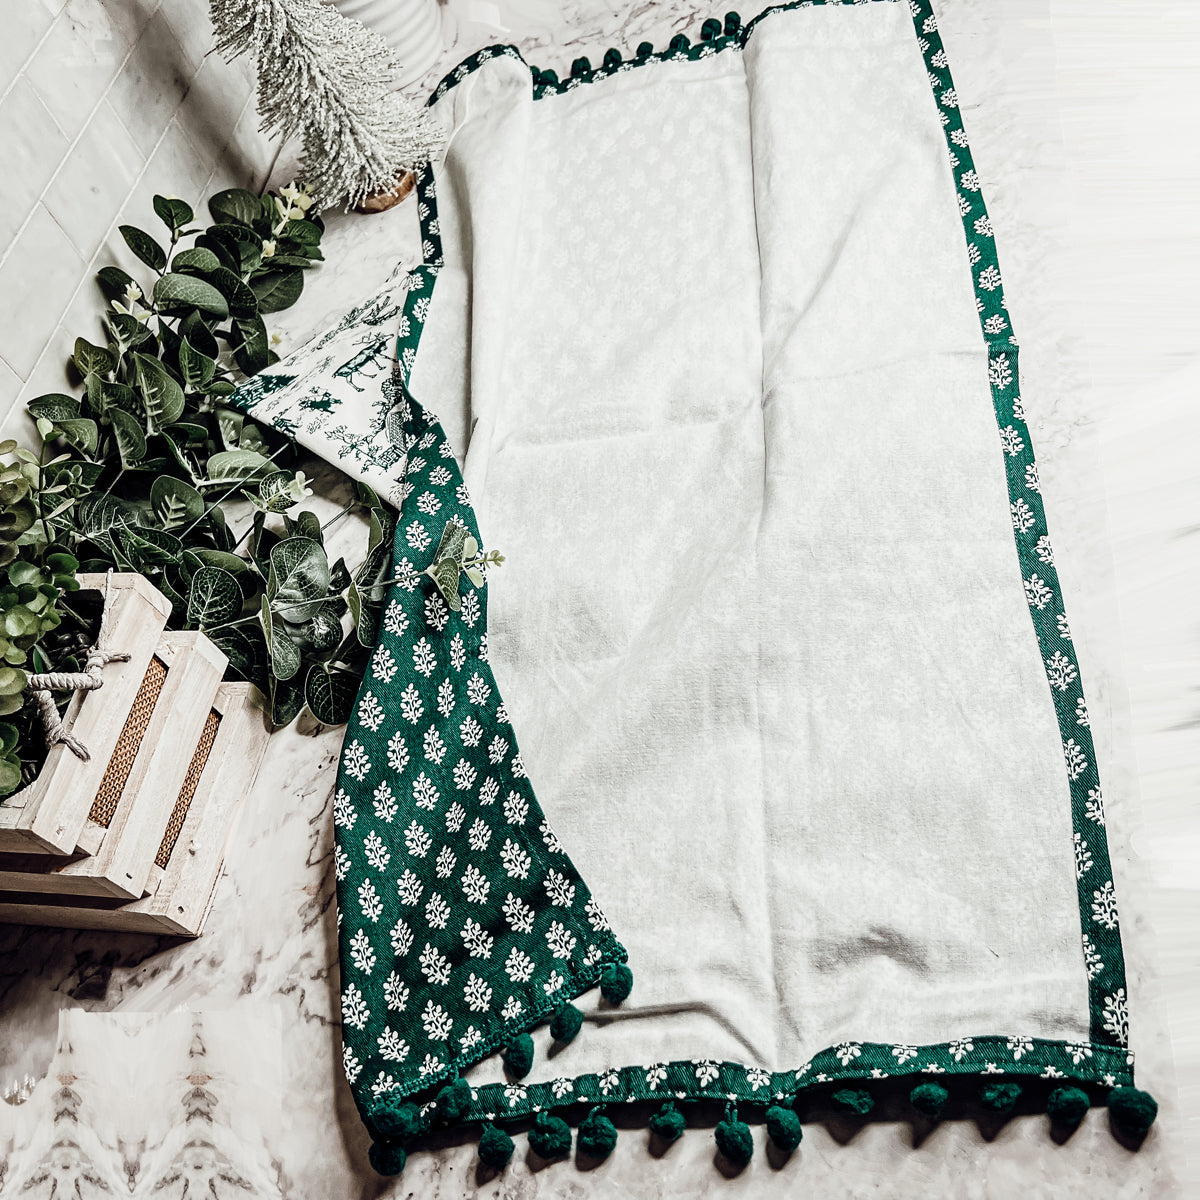 Emerald Green Christmas Kitchen Decor, Tea Towels